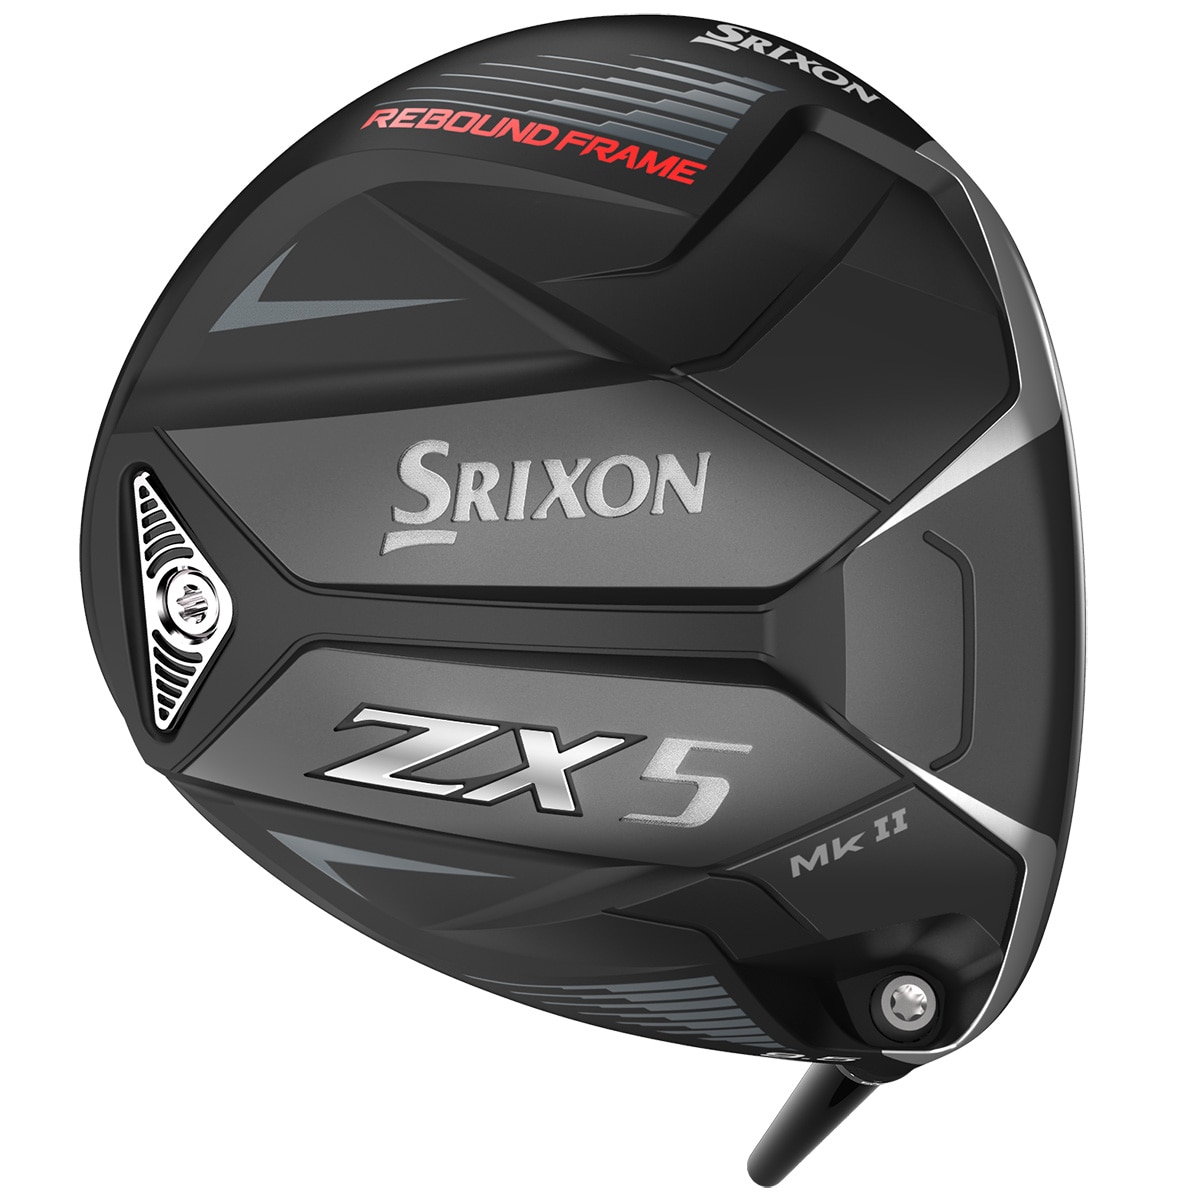 SRIXON ZX5 MK2 9.5° ドライバーヘッド カバー、レンチ、保証書 - クラブ